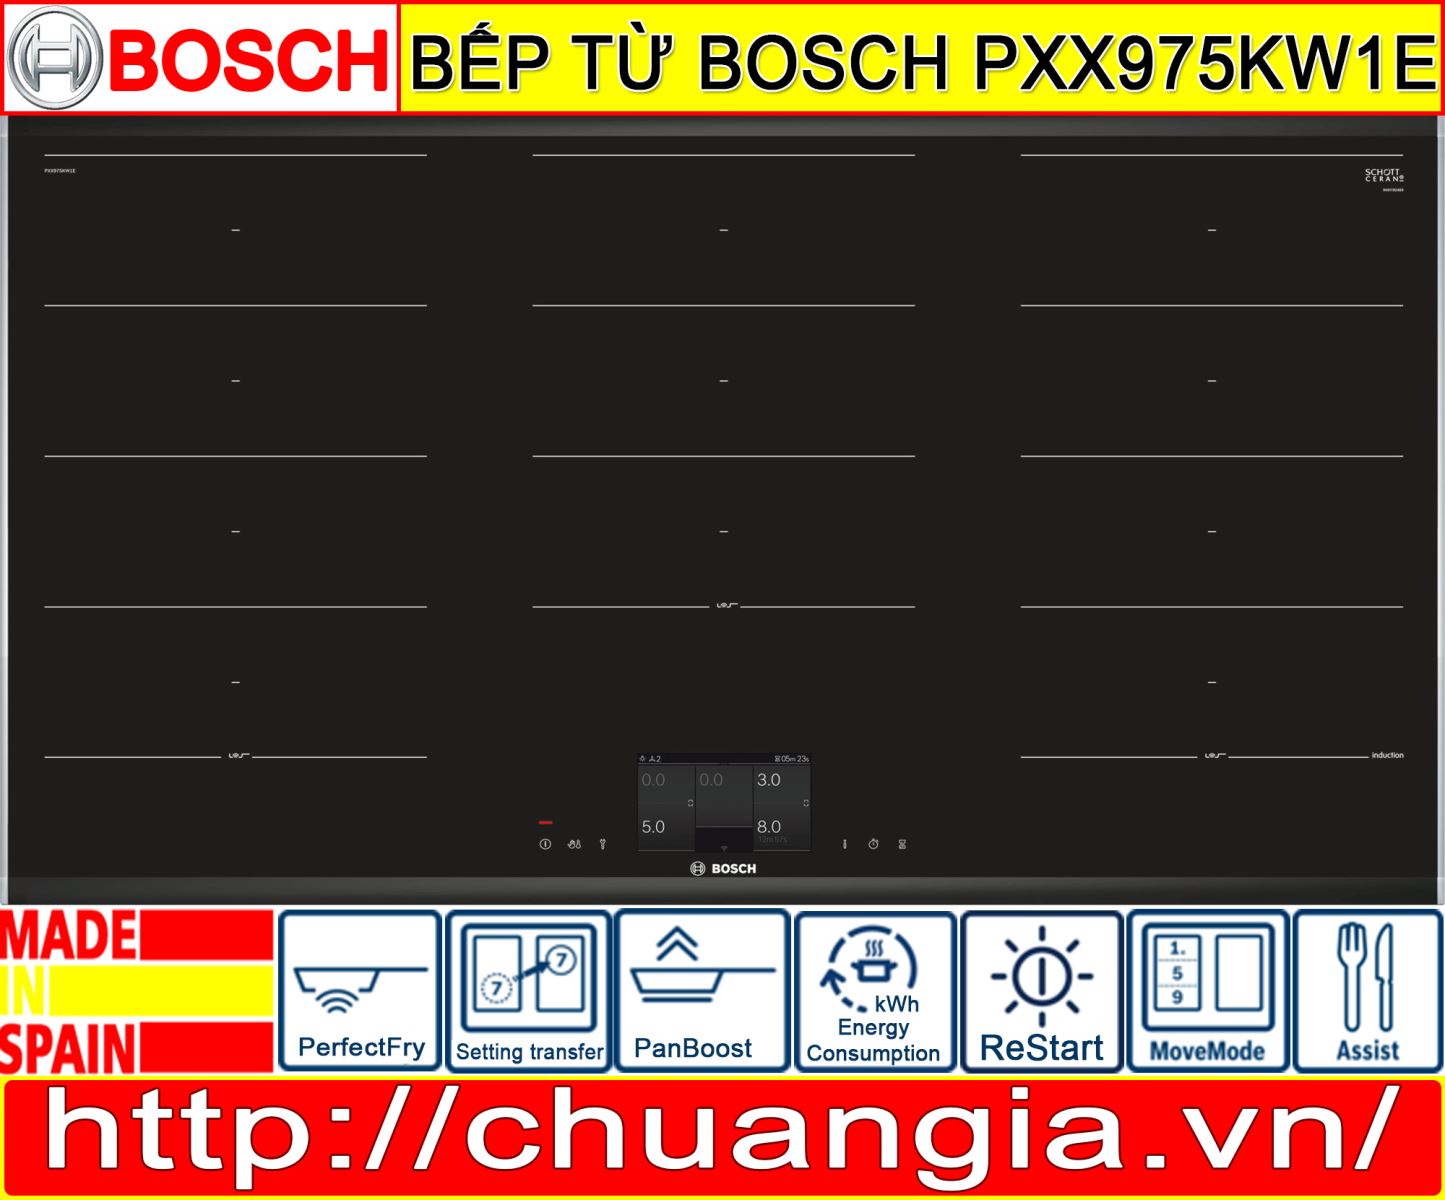 Bếp Từ Bosch PXX975KW1E, bosch pxx975kw1e, bếp từ pxx975kw1e, pxx975kw1e giá, bếp từ thông minh kết nối wifi, pxx975dc1e, bếp từ đa điểm, bếp từ bosch đa điểm